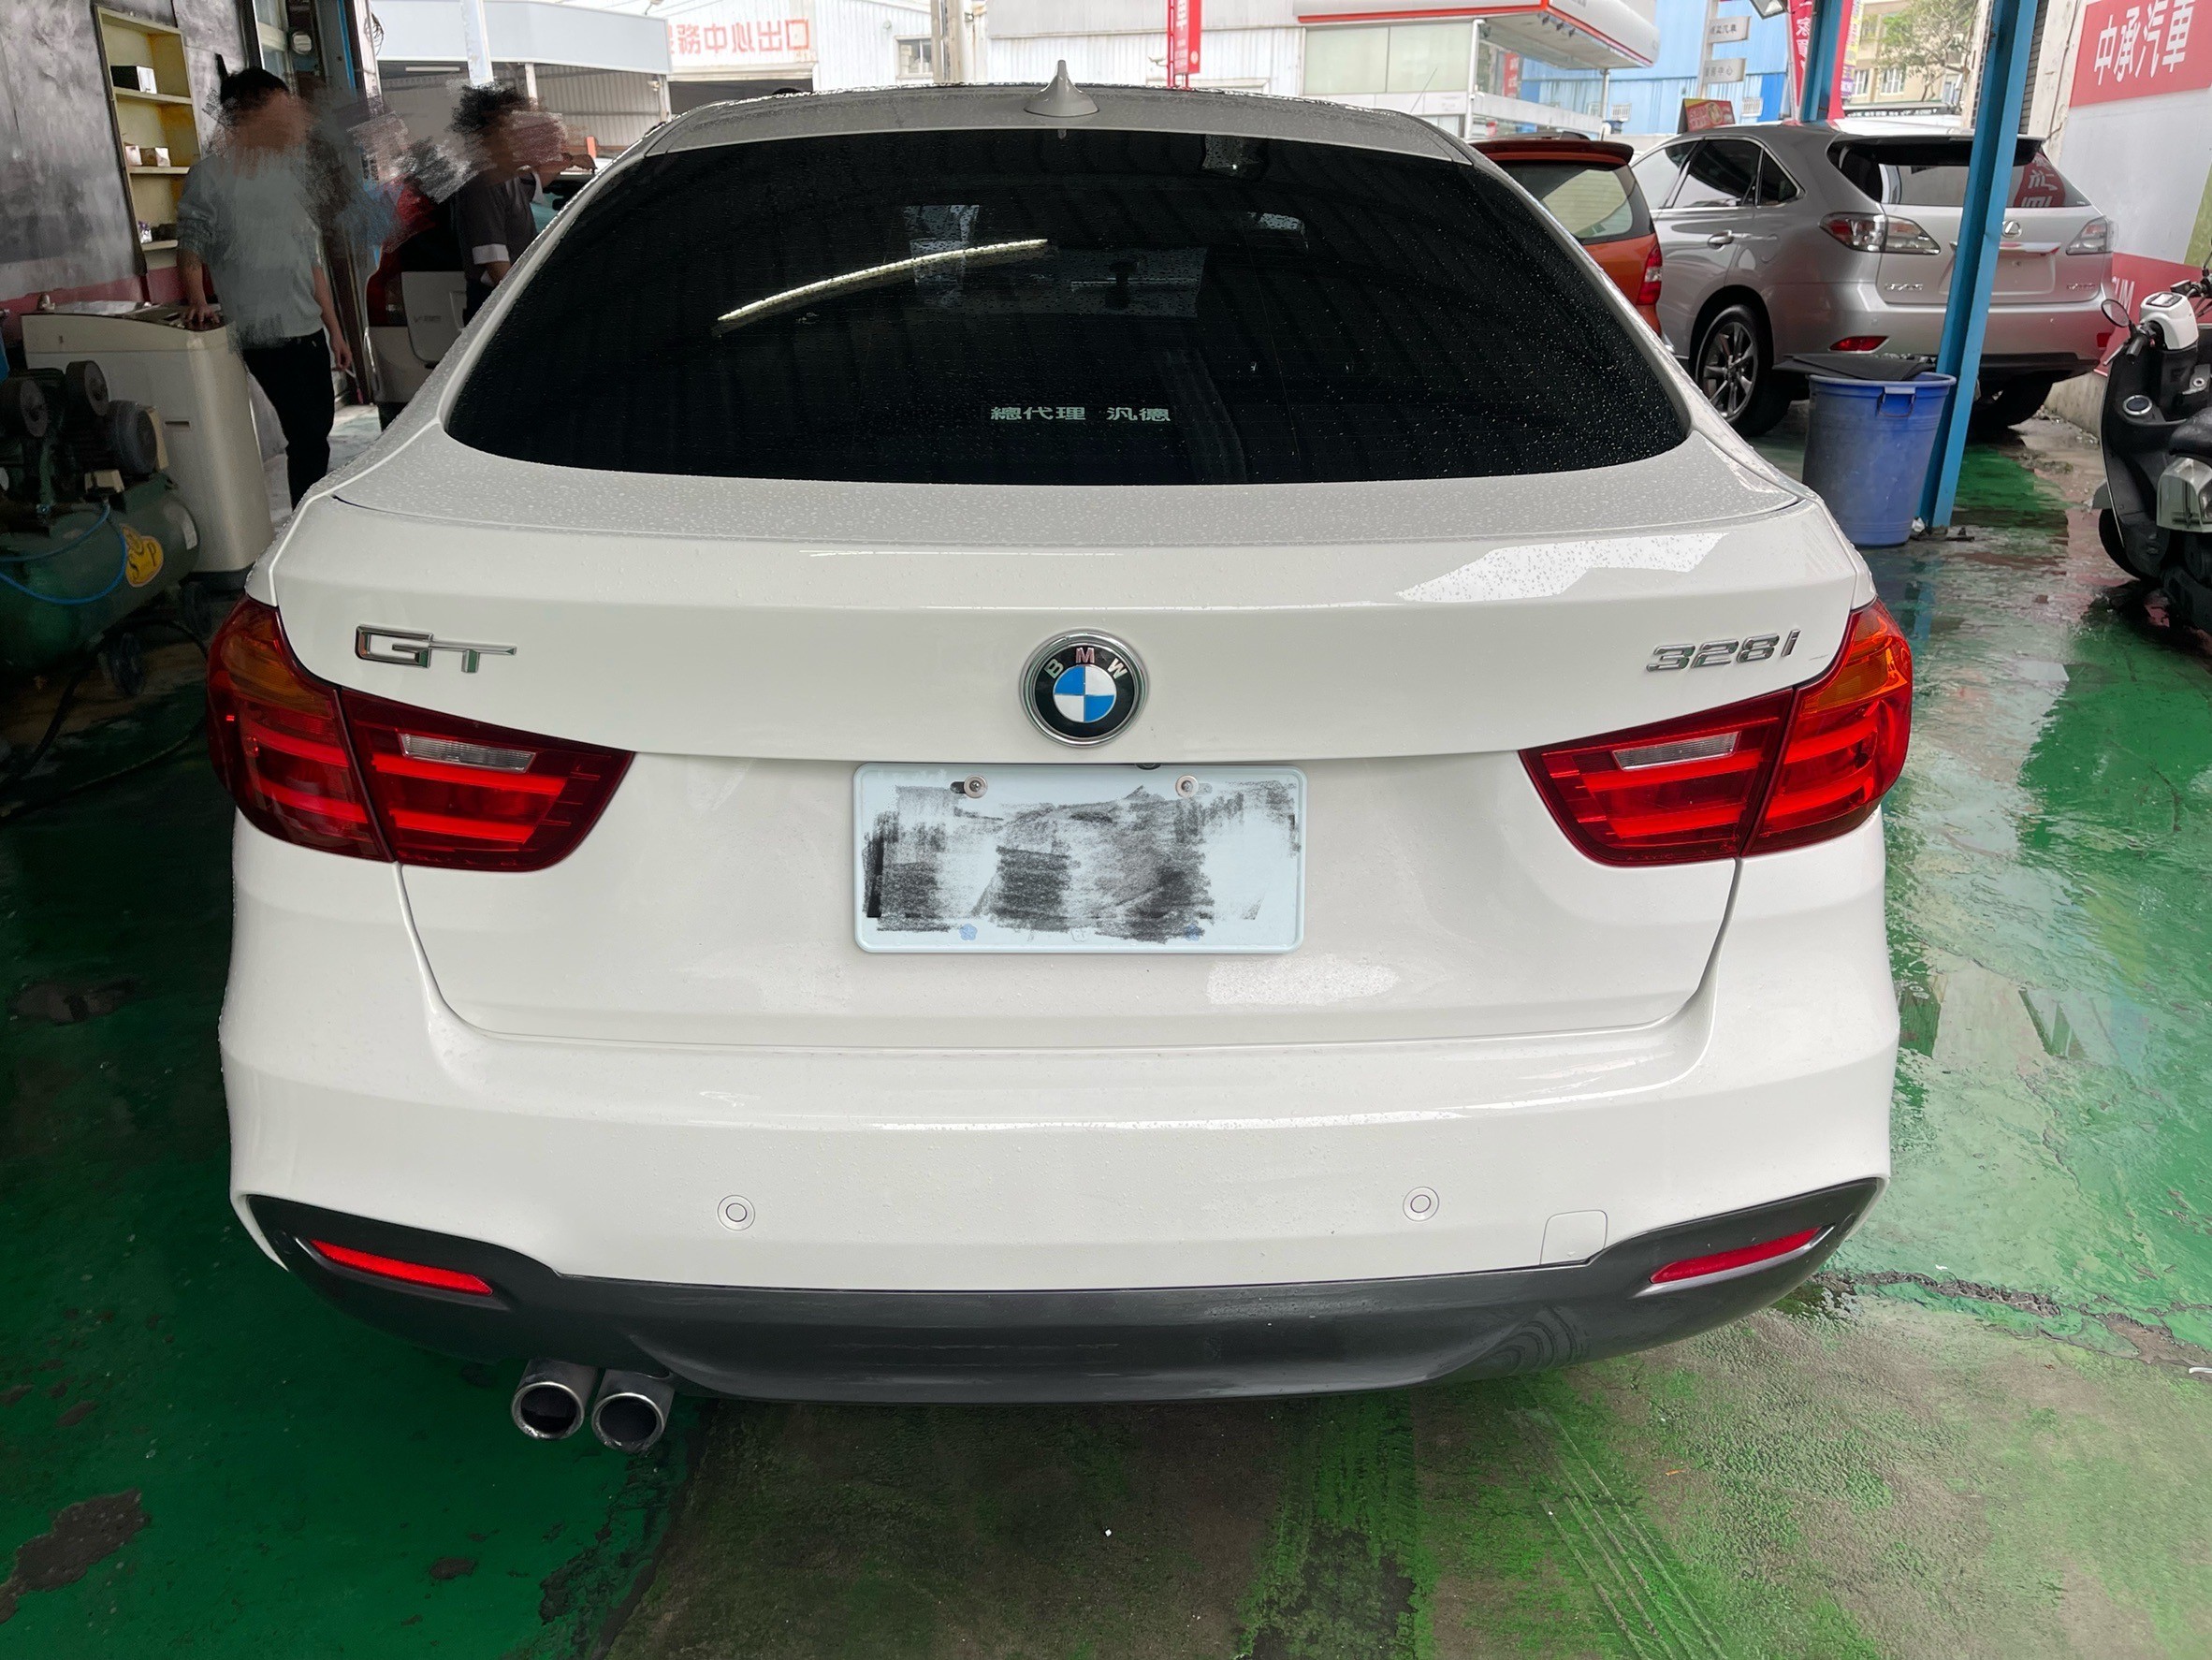 BMW中古車買賣 -2015-328i GT MSport-圖片